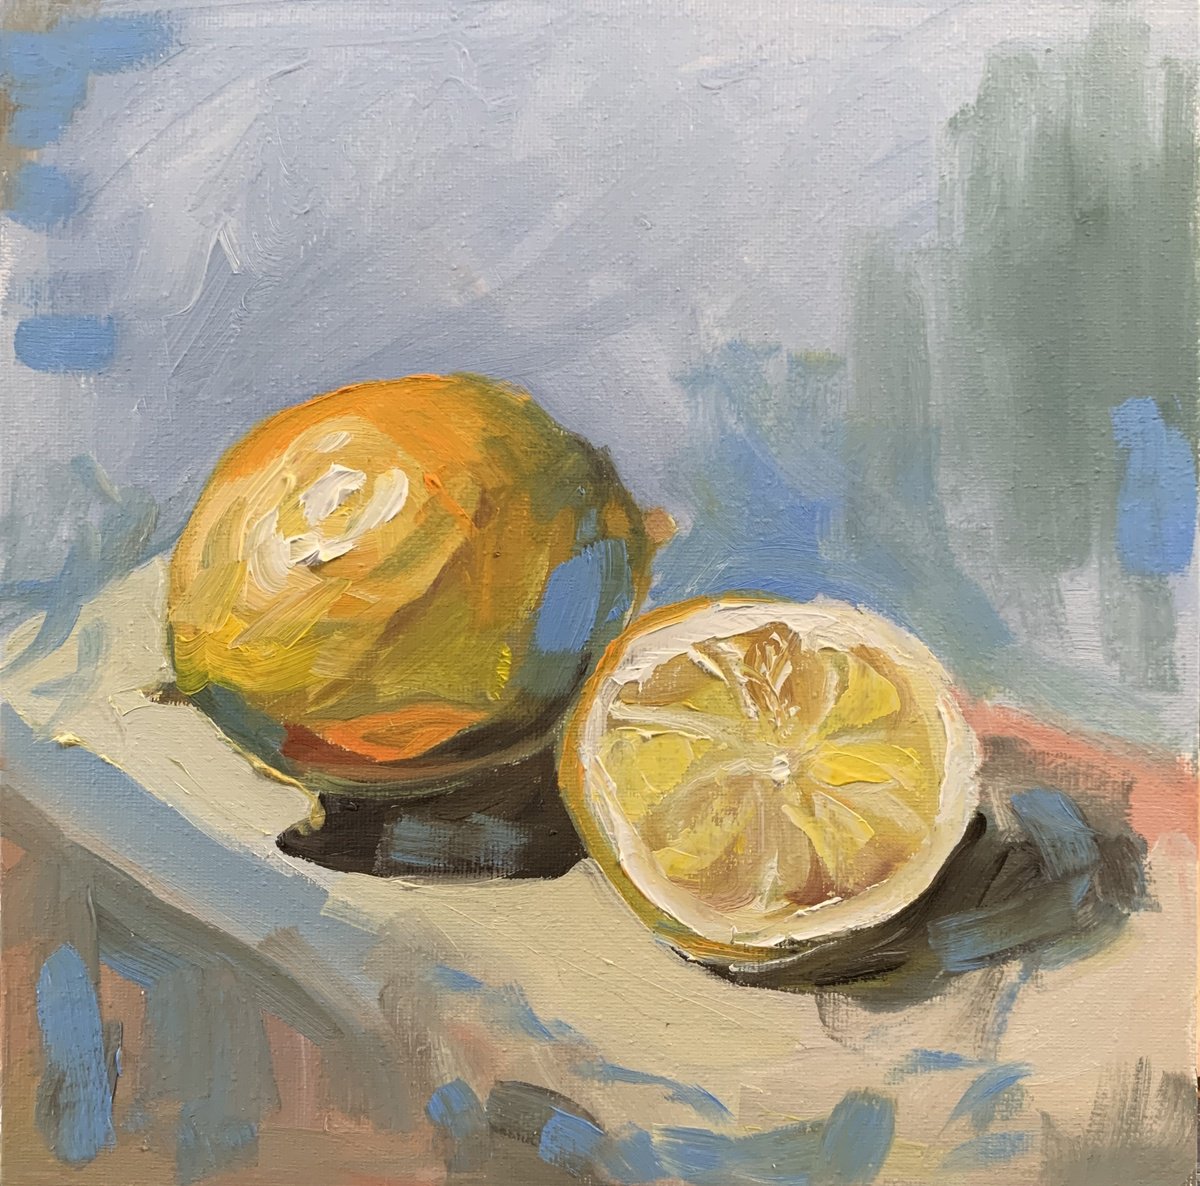 Lemons. #3. Still life, 25x25cm by Vita Schagen